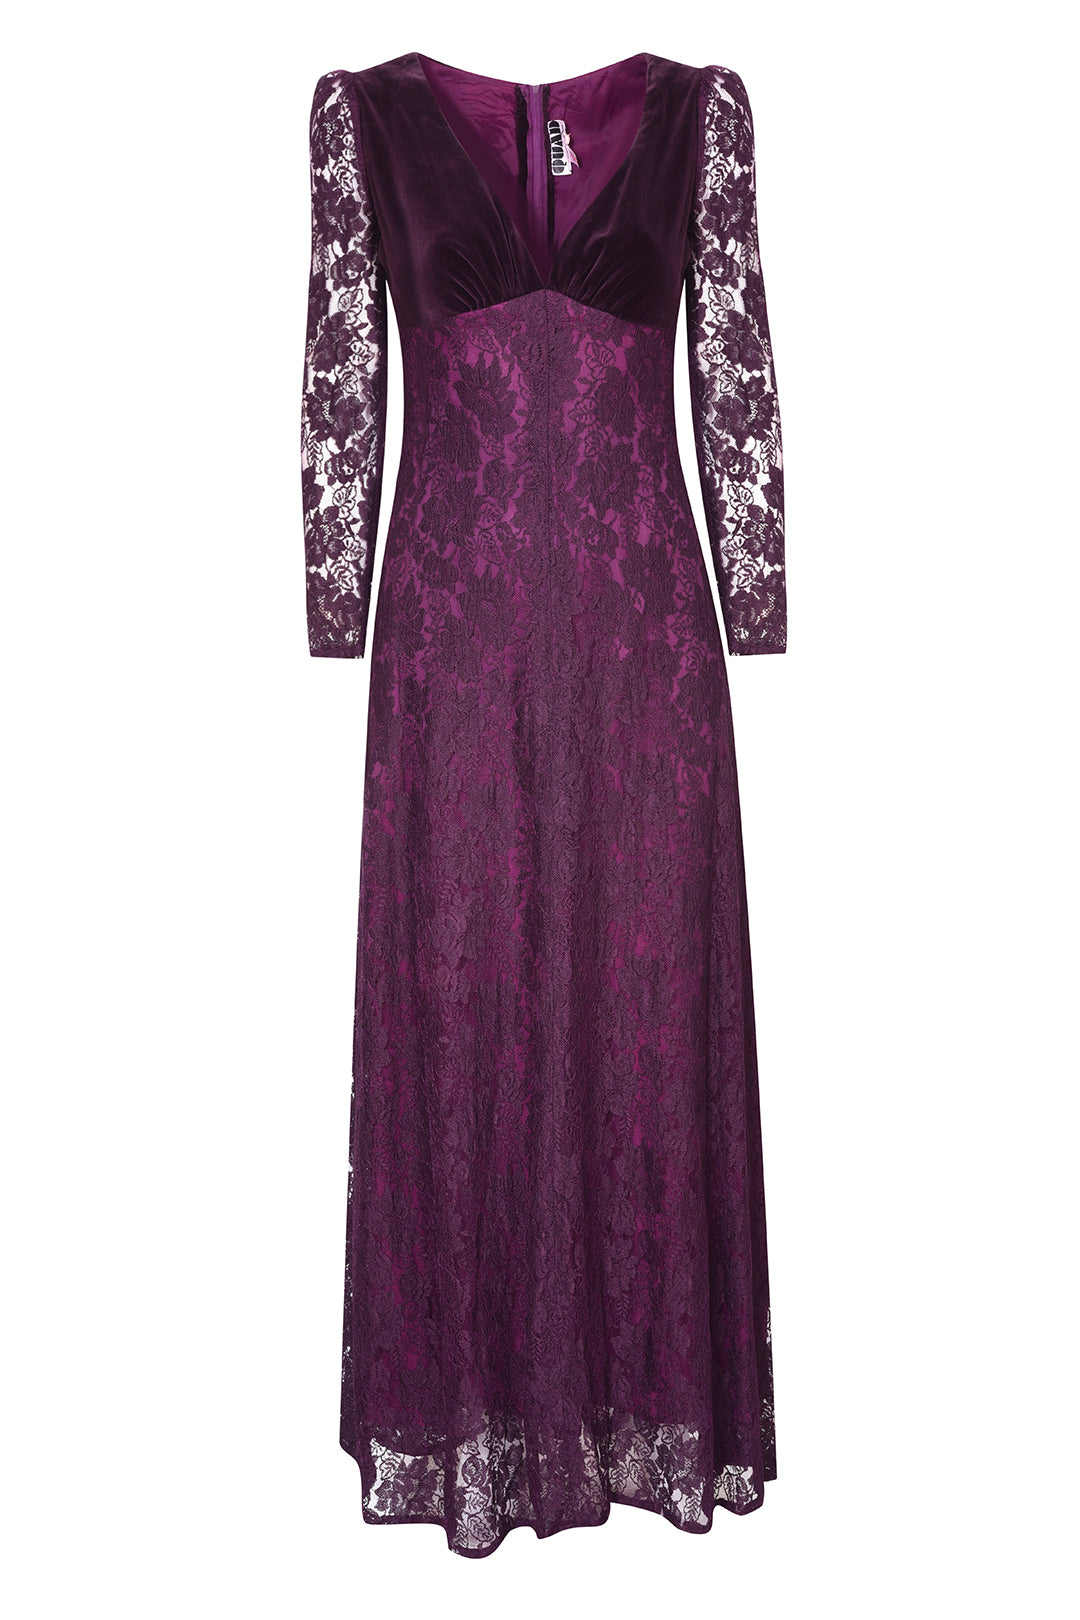 70's Purple Lace Dress